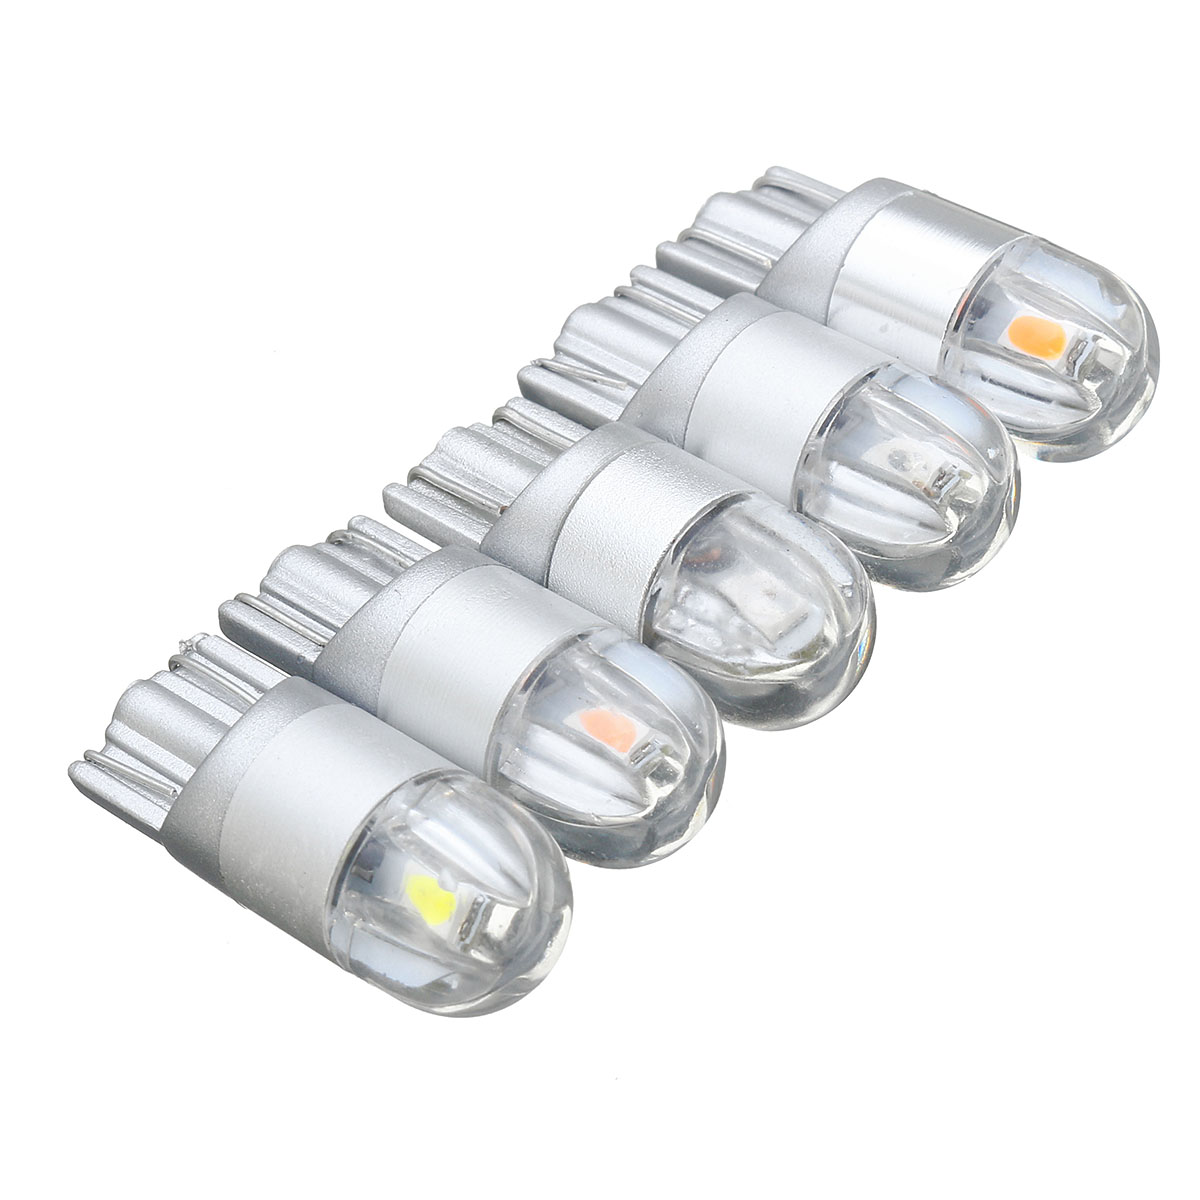 

12V T10 168 194 5W LED Bulbs Car Interior Reading Light Side Lamp Super Bright